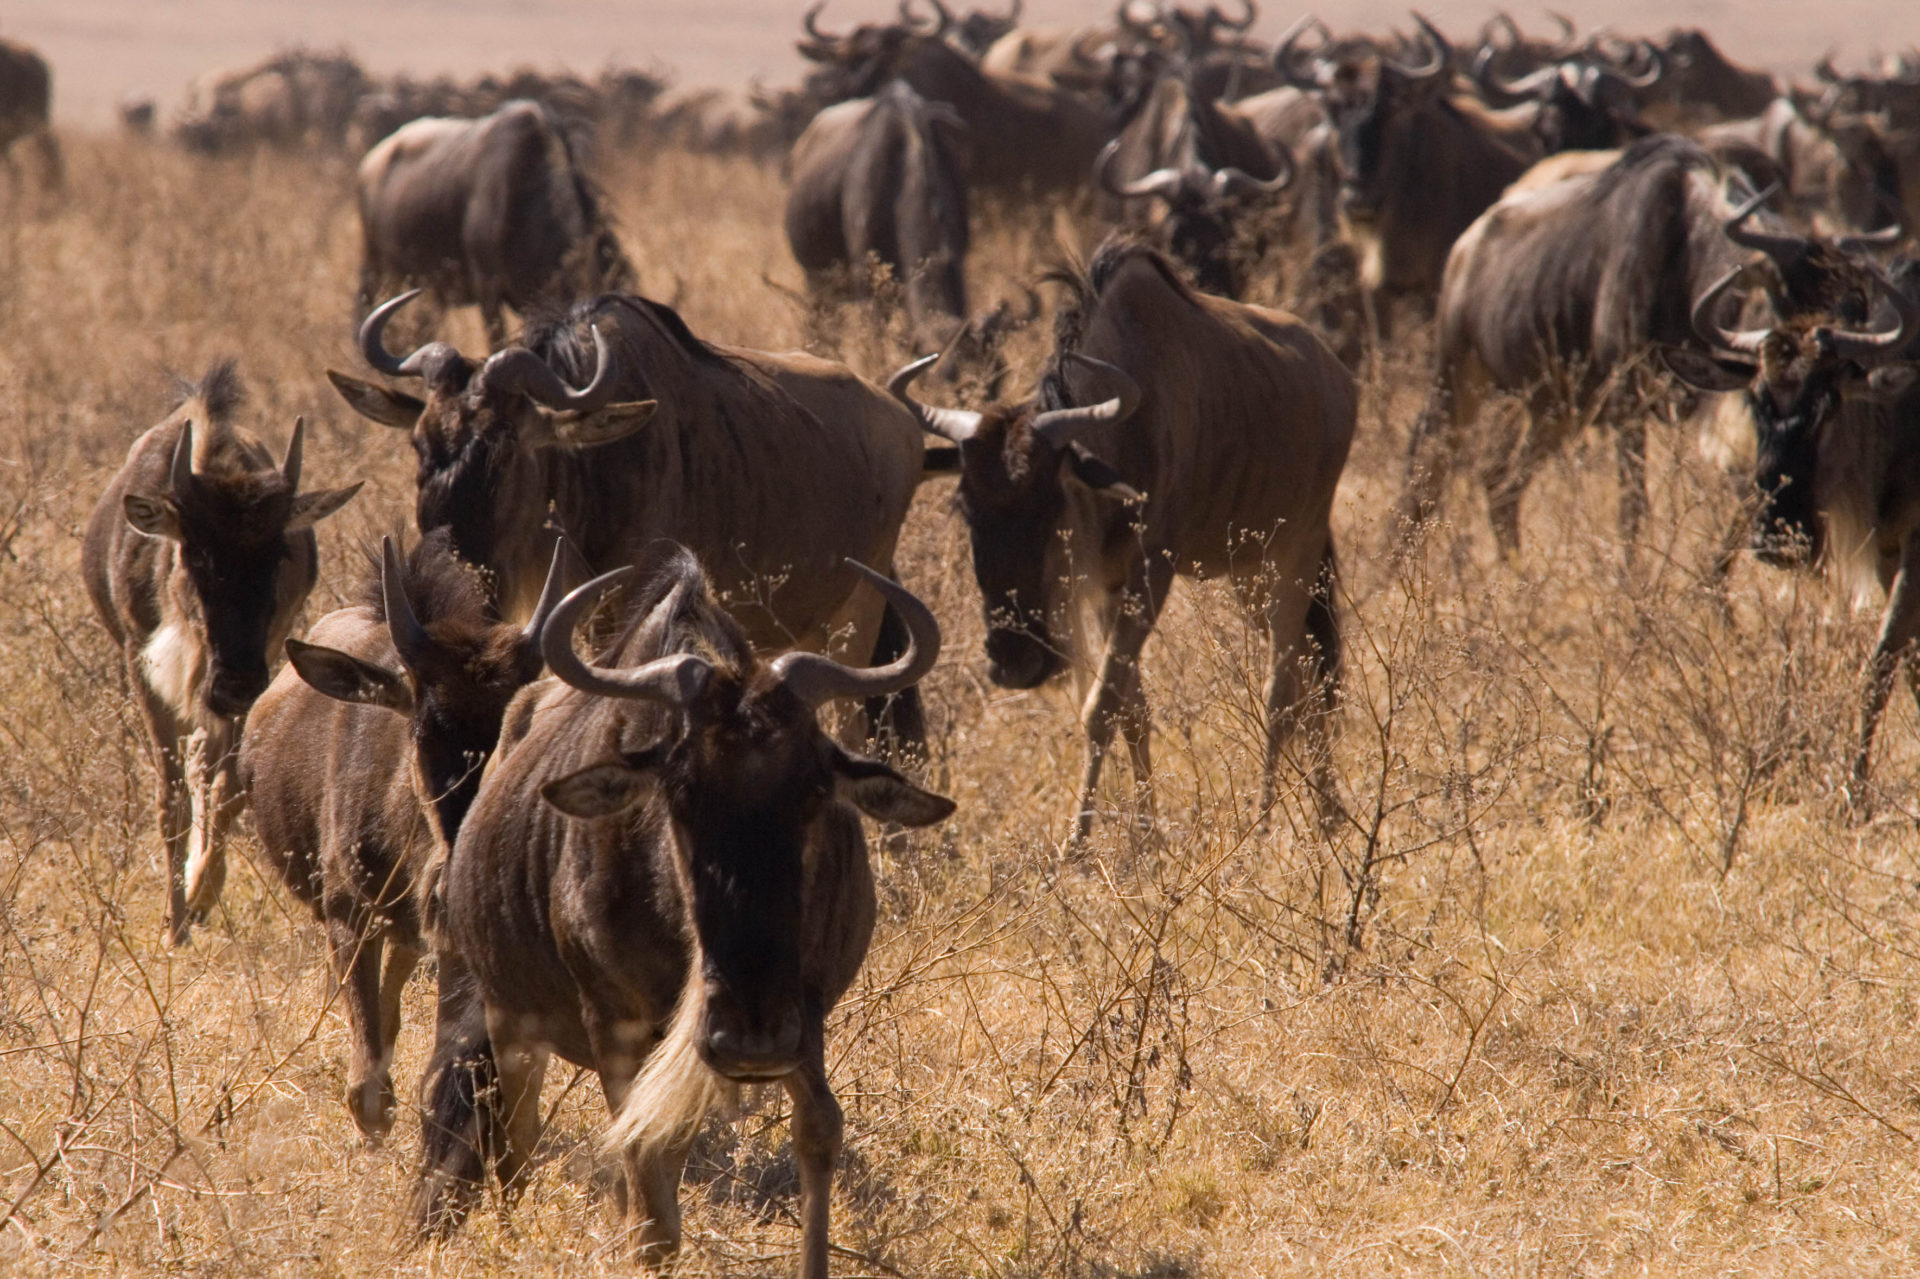 Serengeti wildebeests